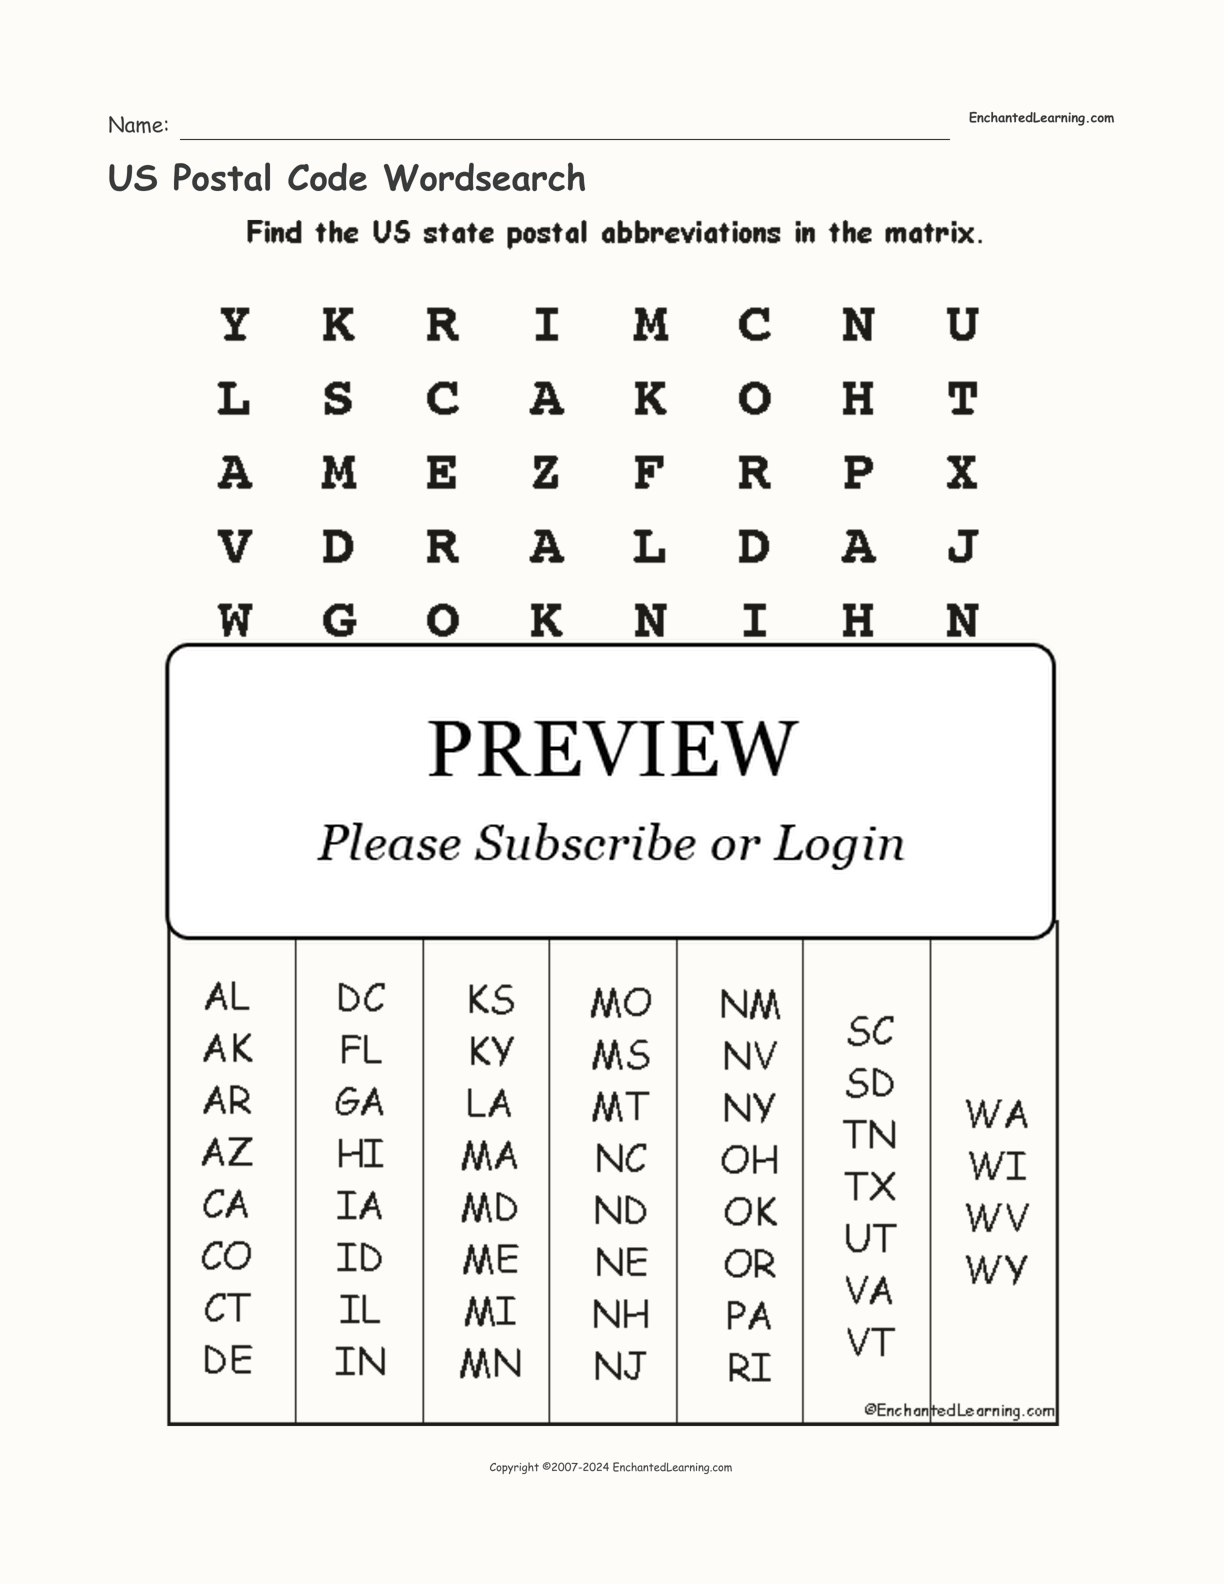 US Postal Code Wordsearch interactive worksheet page 1